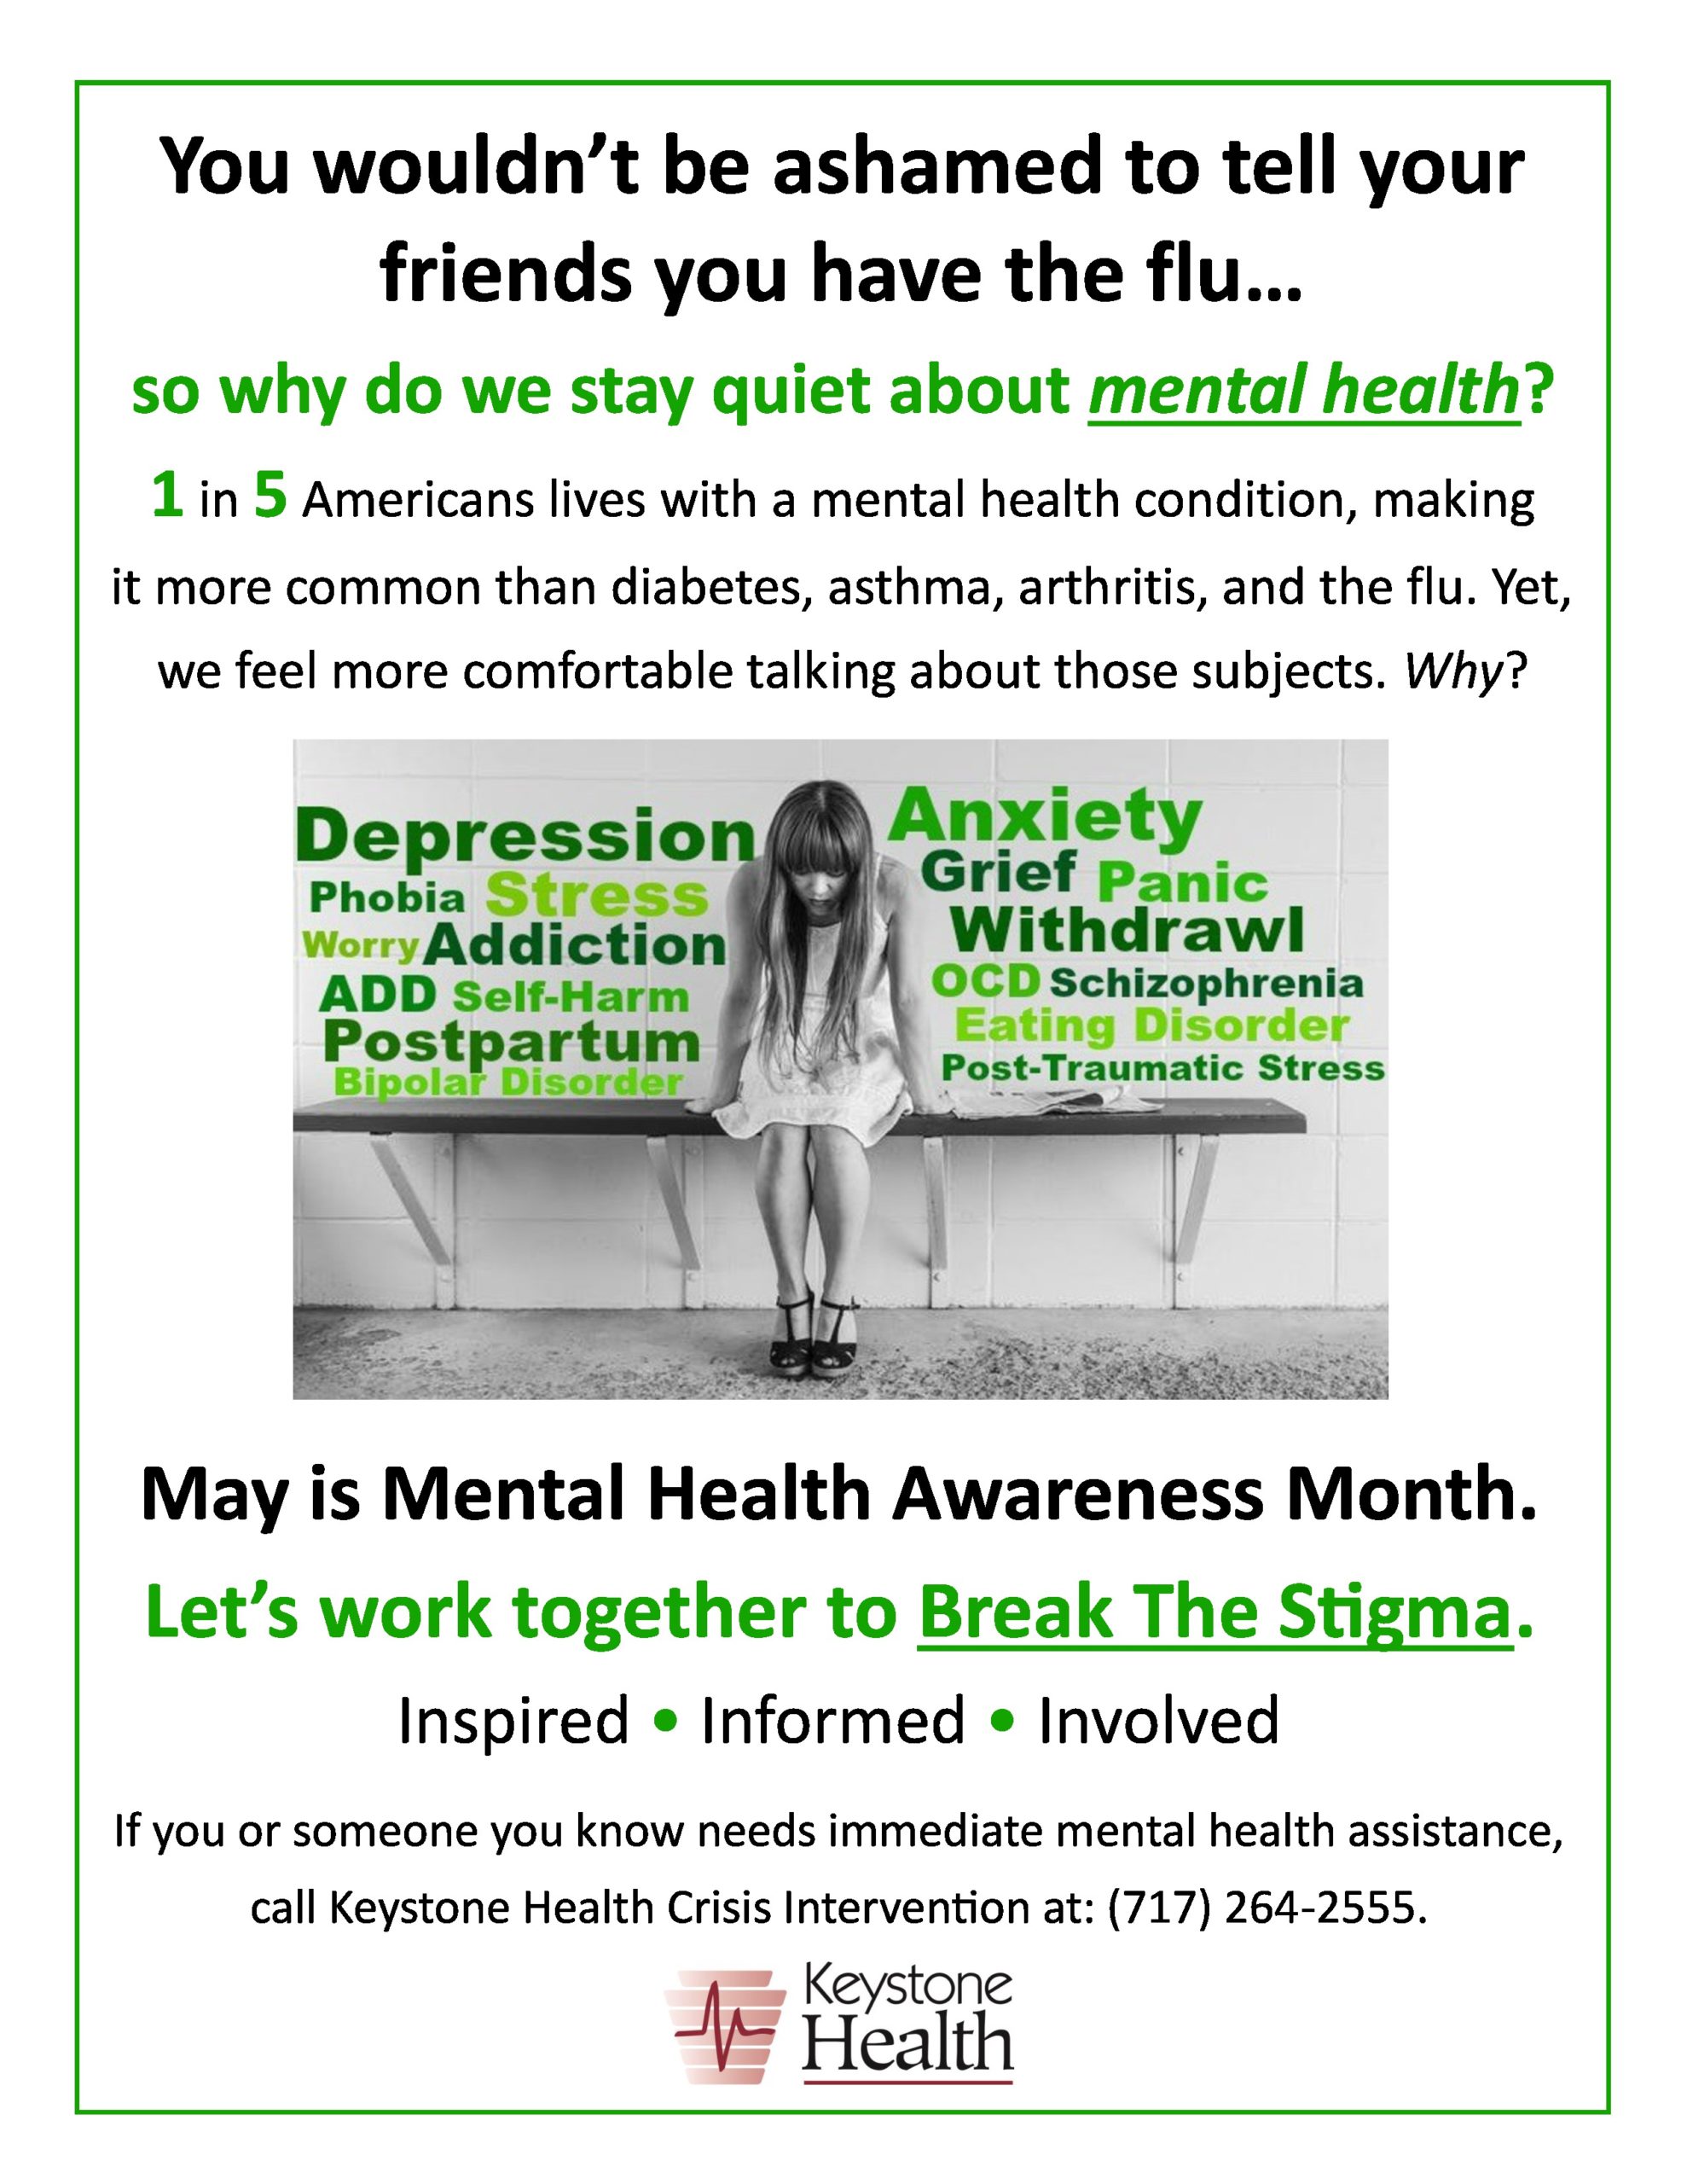 May is Mental Health Awareness Month Keystone Health